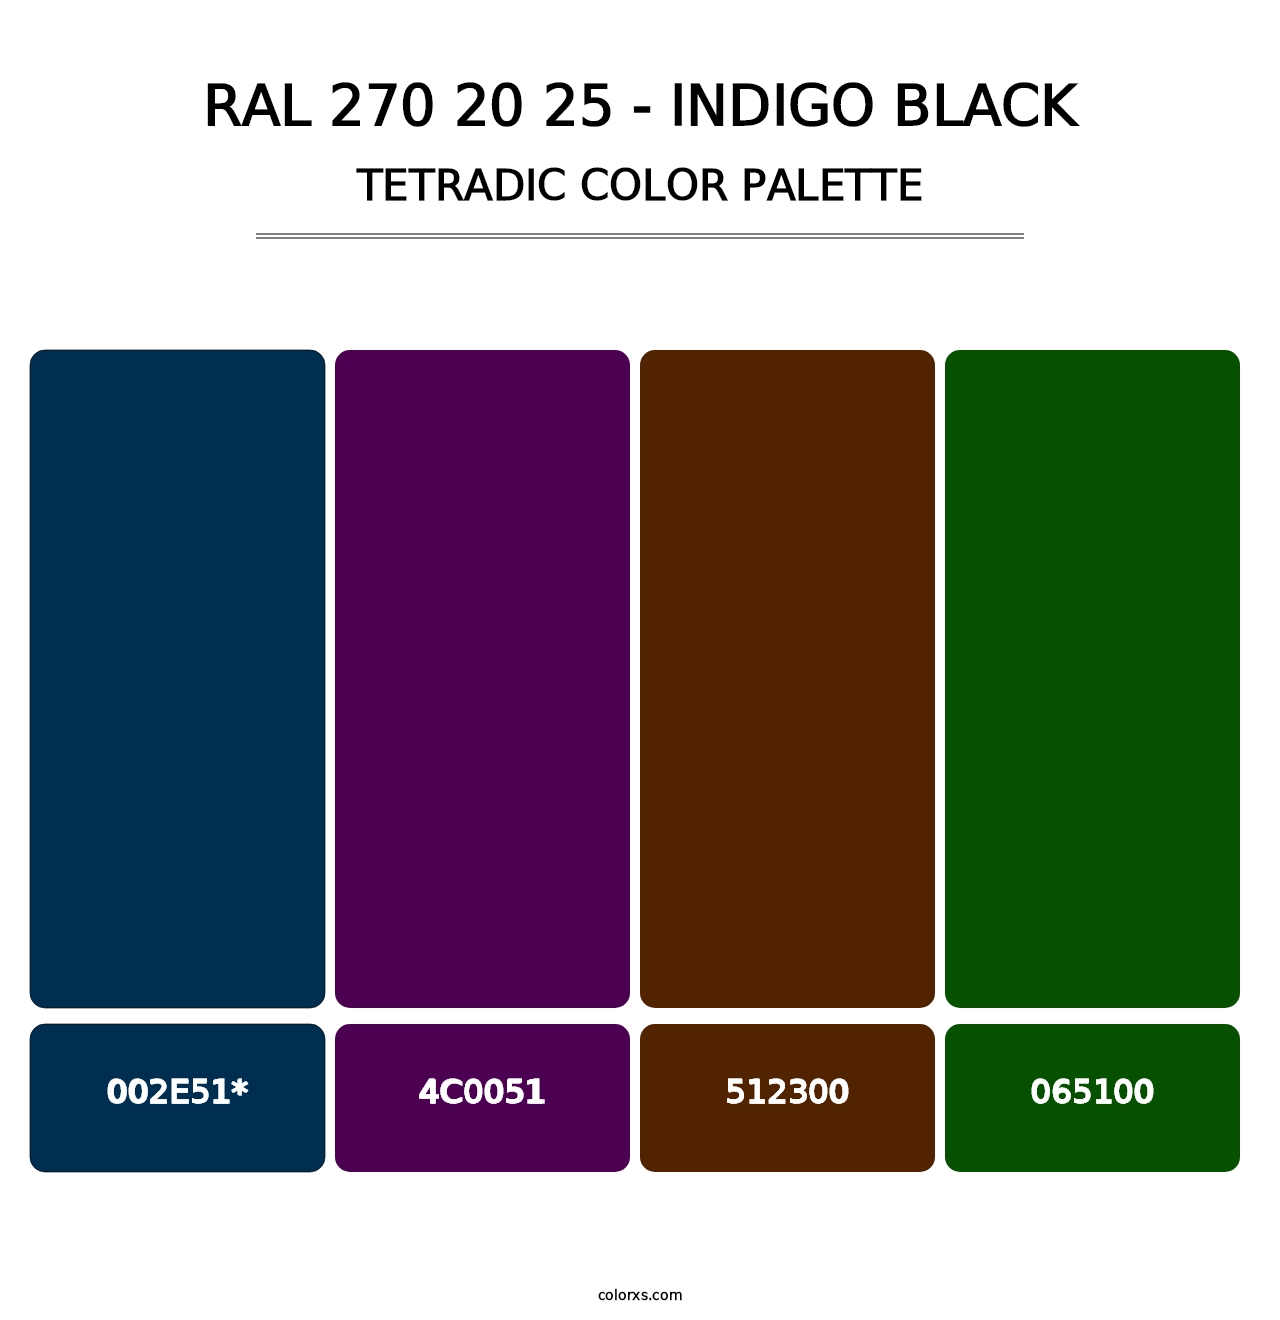 RAL 270 20 25 - Indigo Black - Tetradic Color Palette